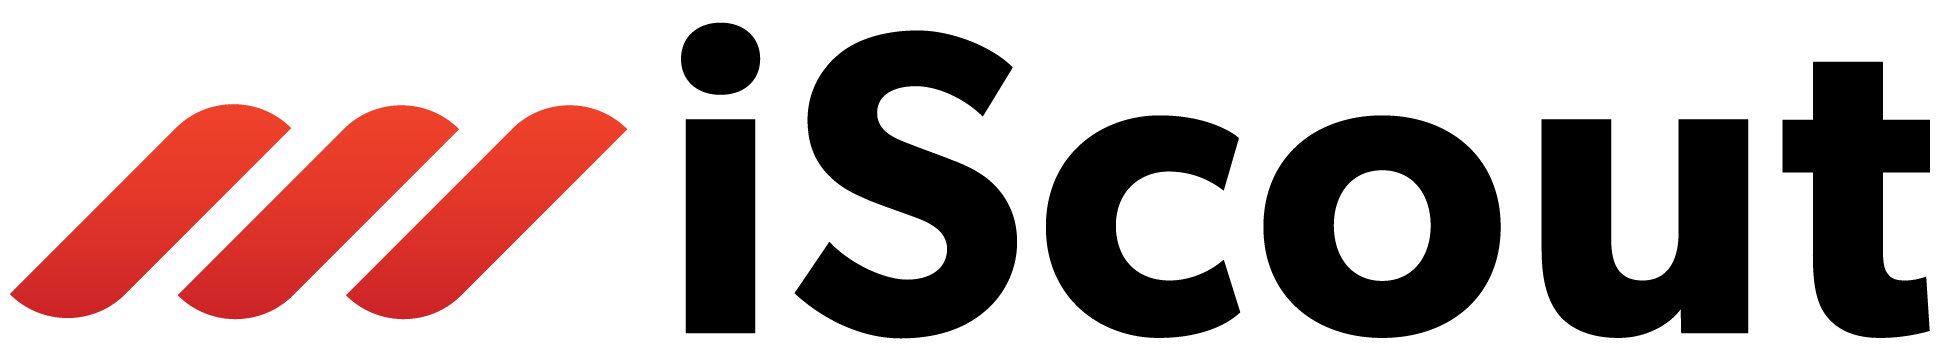 iSocut logo